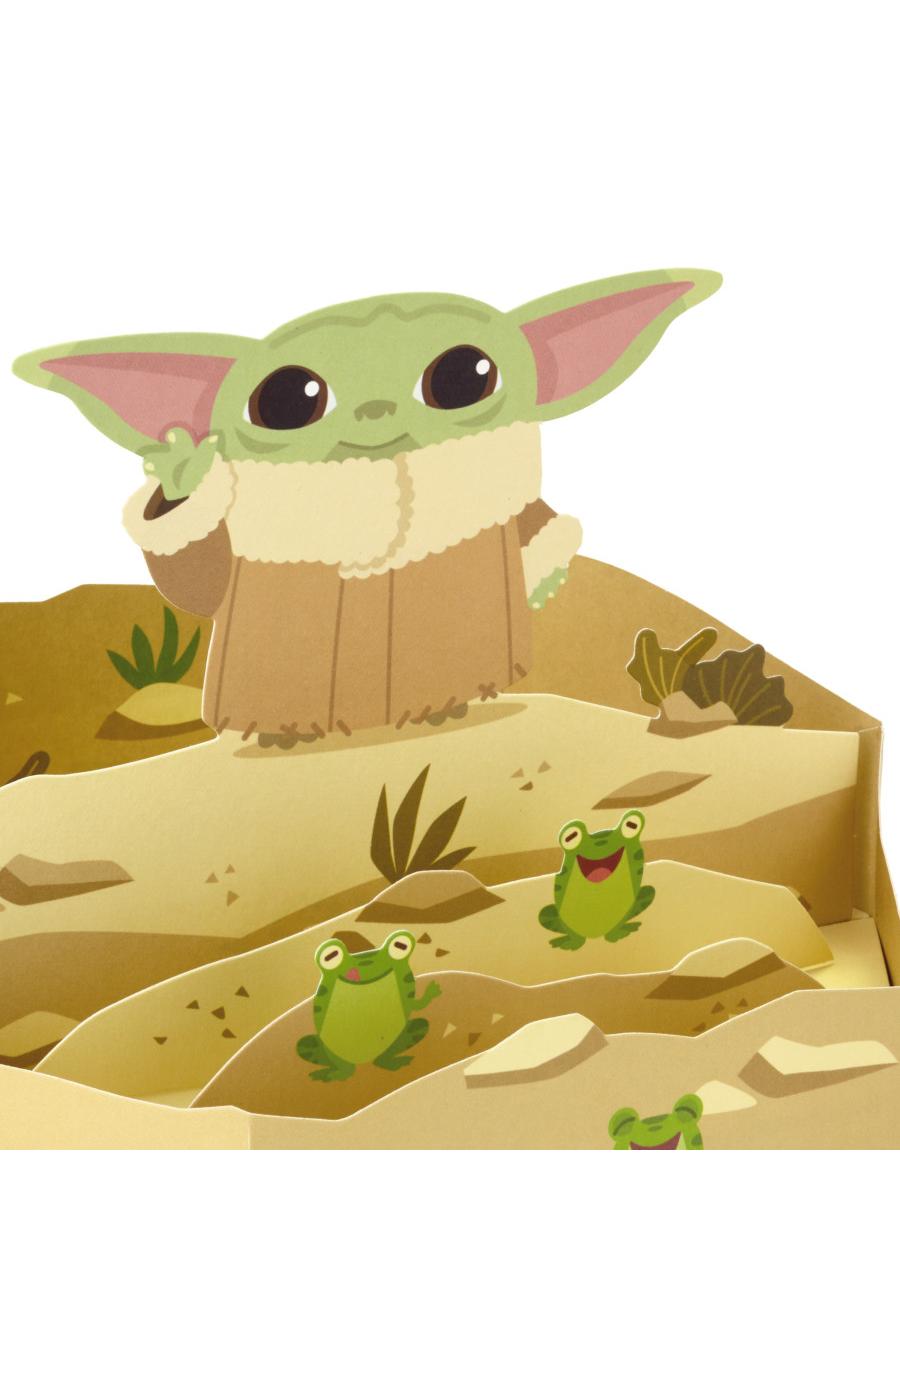 Hallmark Paper Wonder Reaching Out Star Wars Baby Yoda Pop Up Card - E64; image 3 of 5